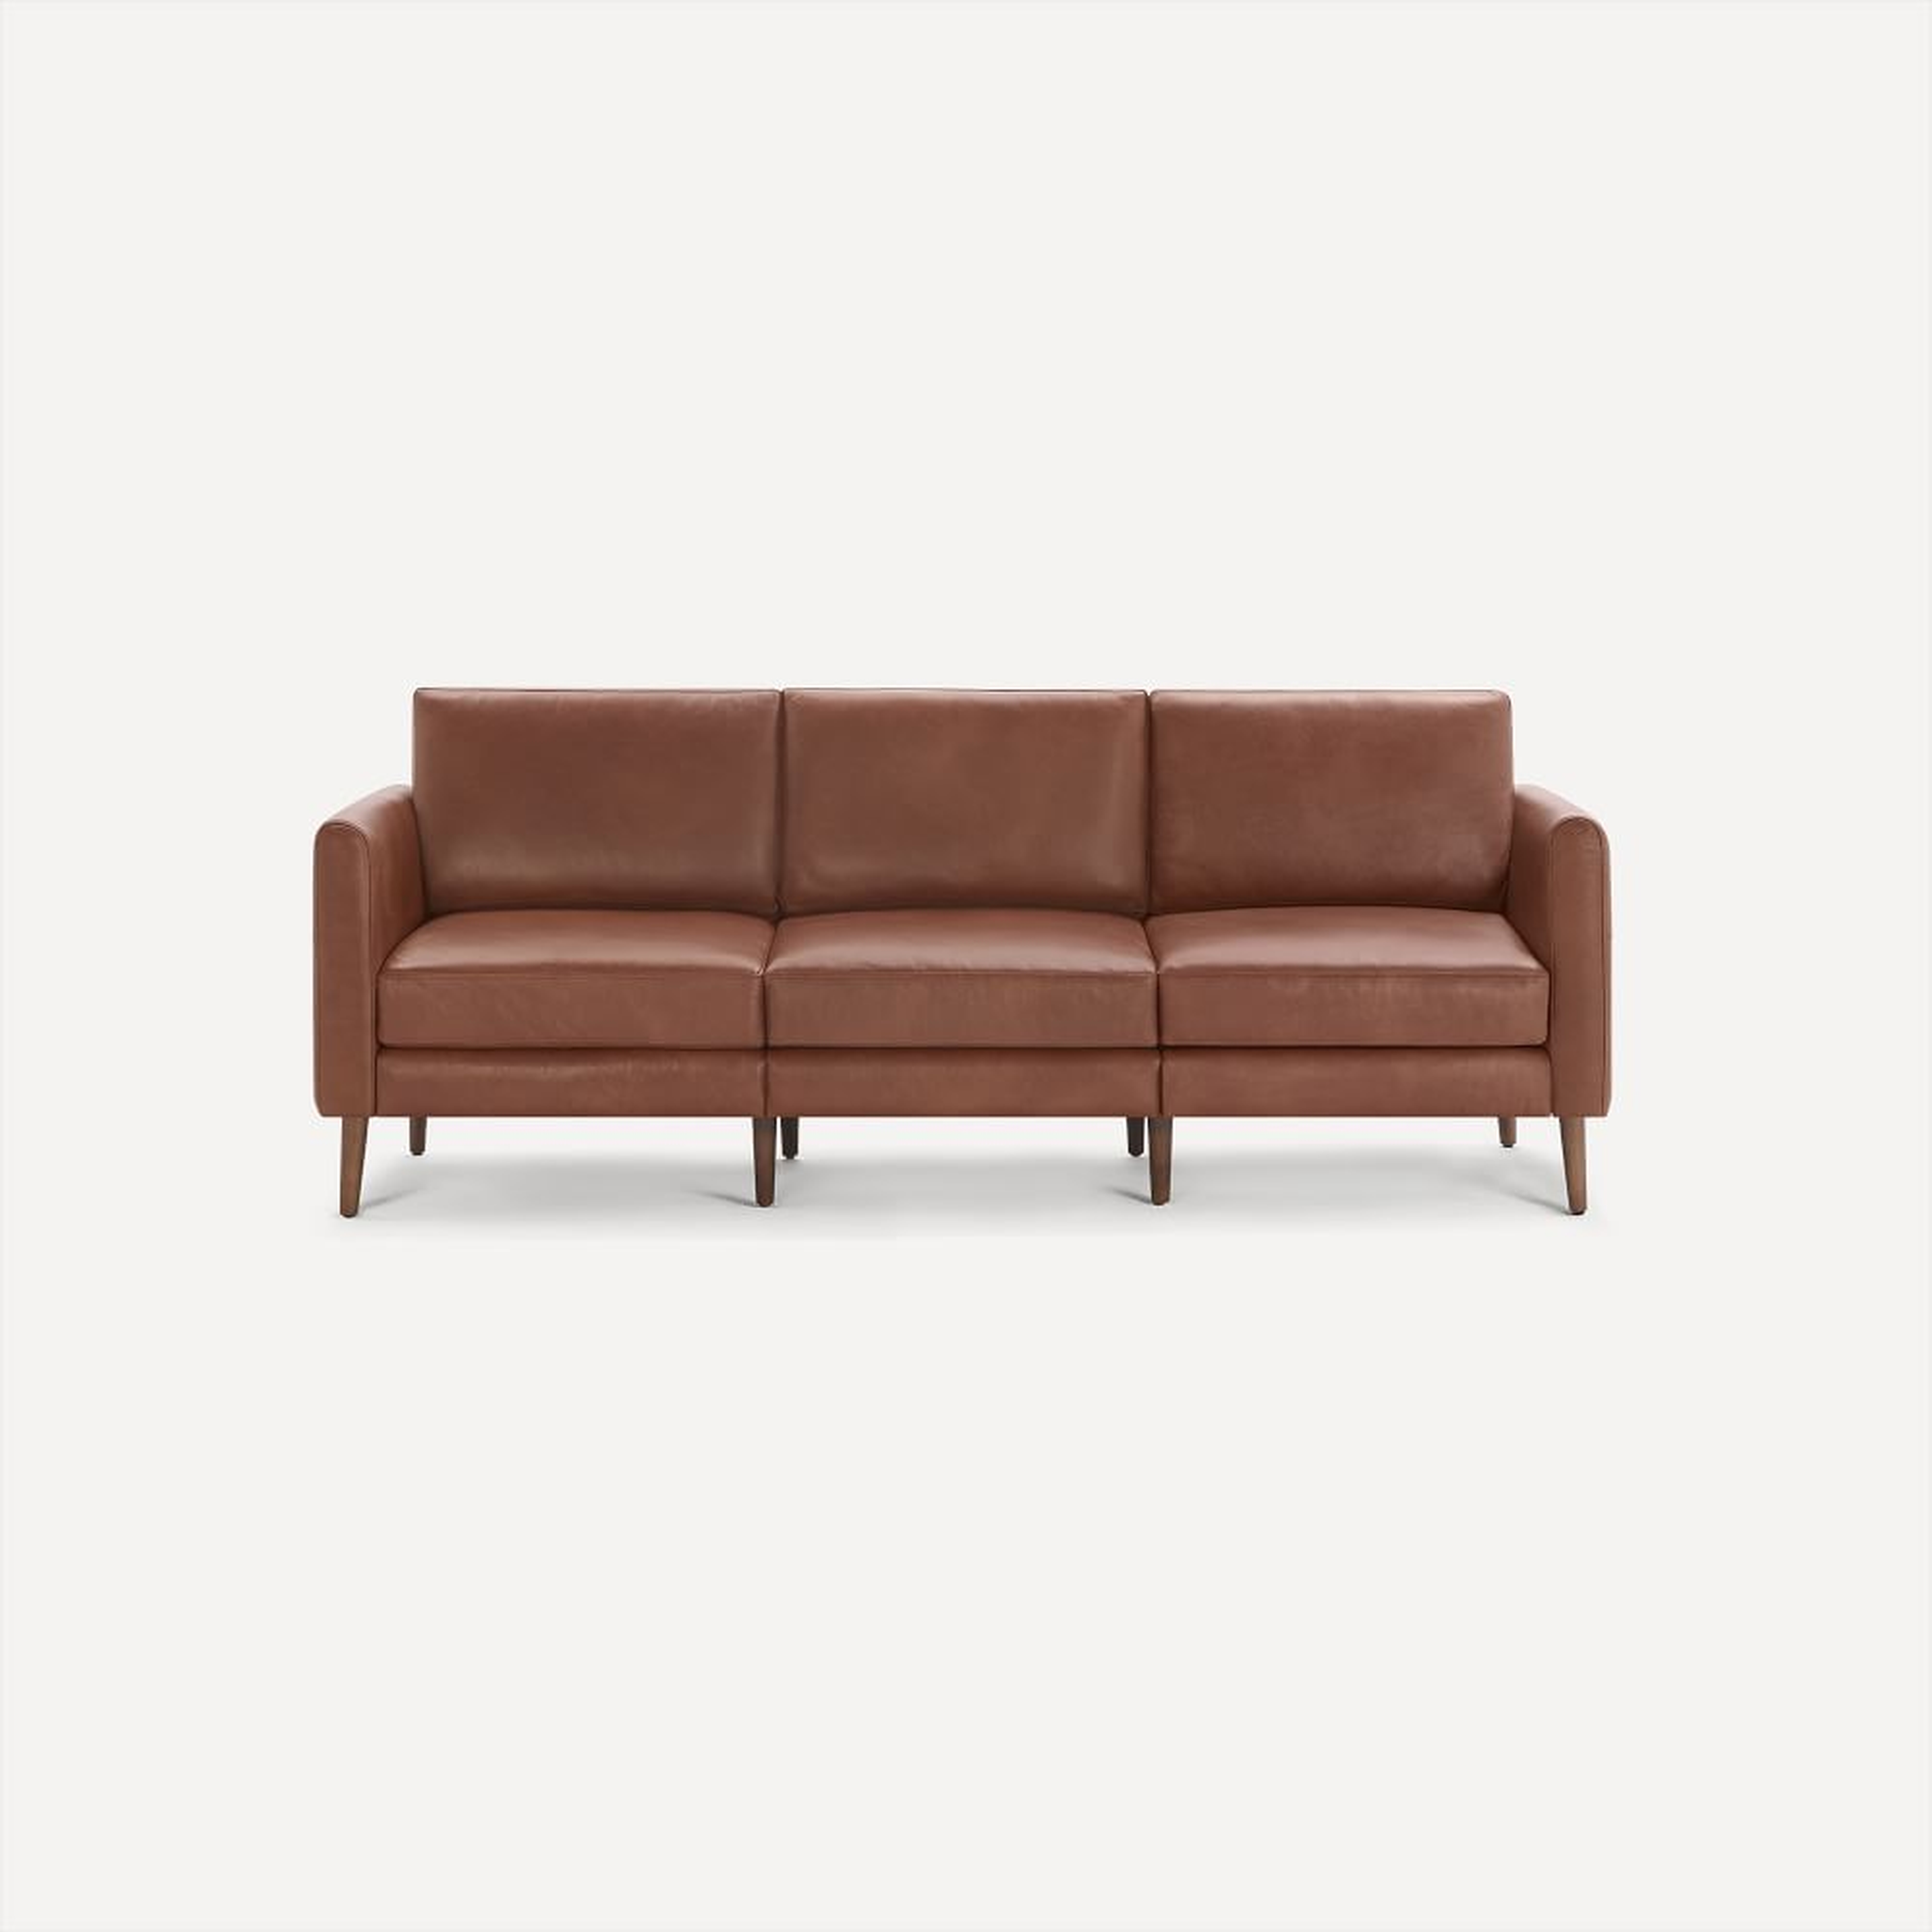 Nomad Arch Leather Sofa, Chestnut, Walnut Wood - West Elm